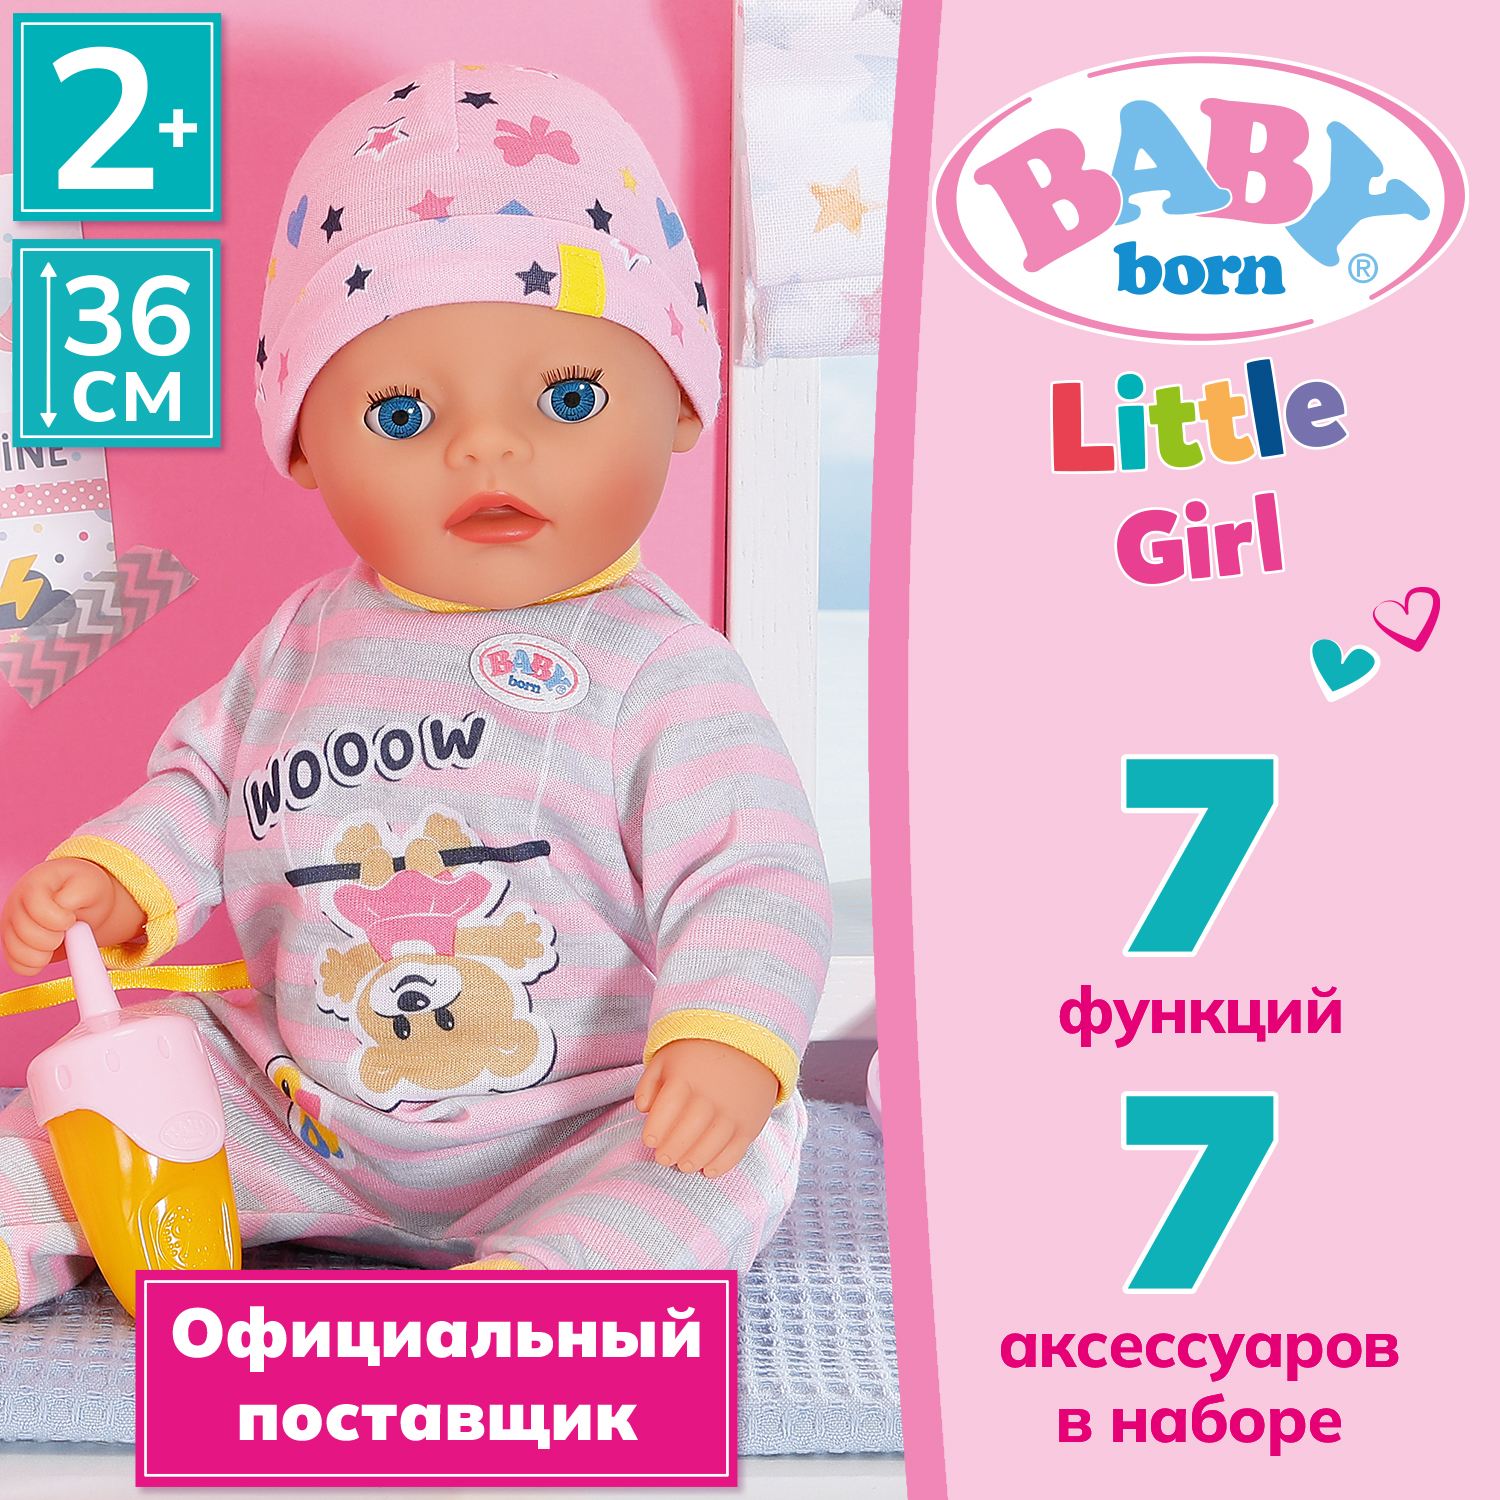 

Кукла Zapf Creation Маленькая девочка 36 см. BABY born 41024, "Маленькая девочка" 36 см